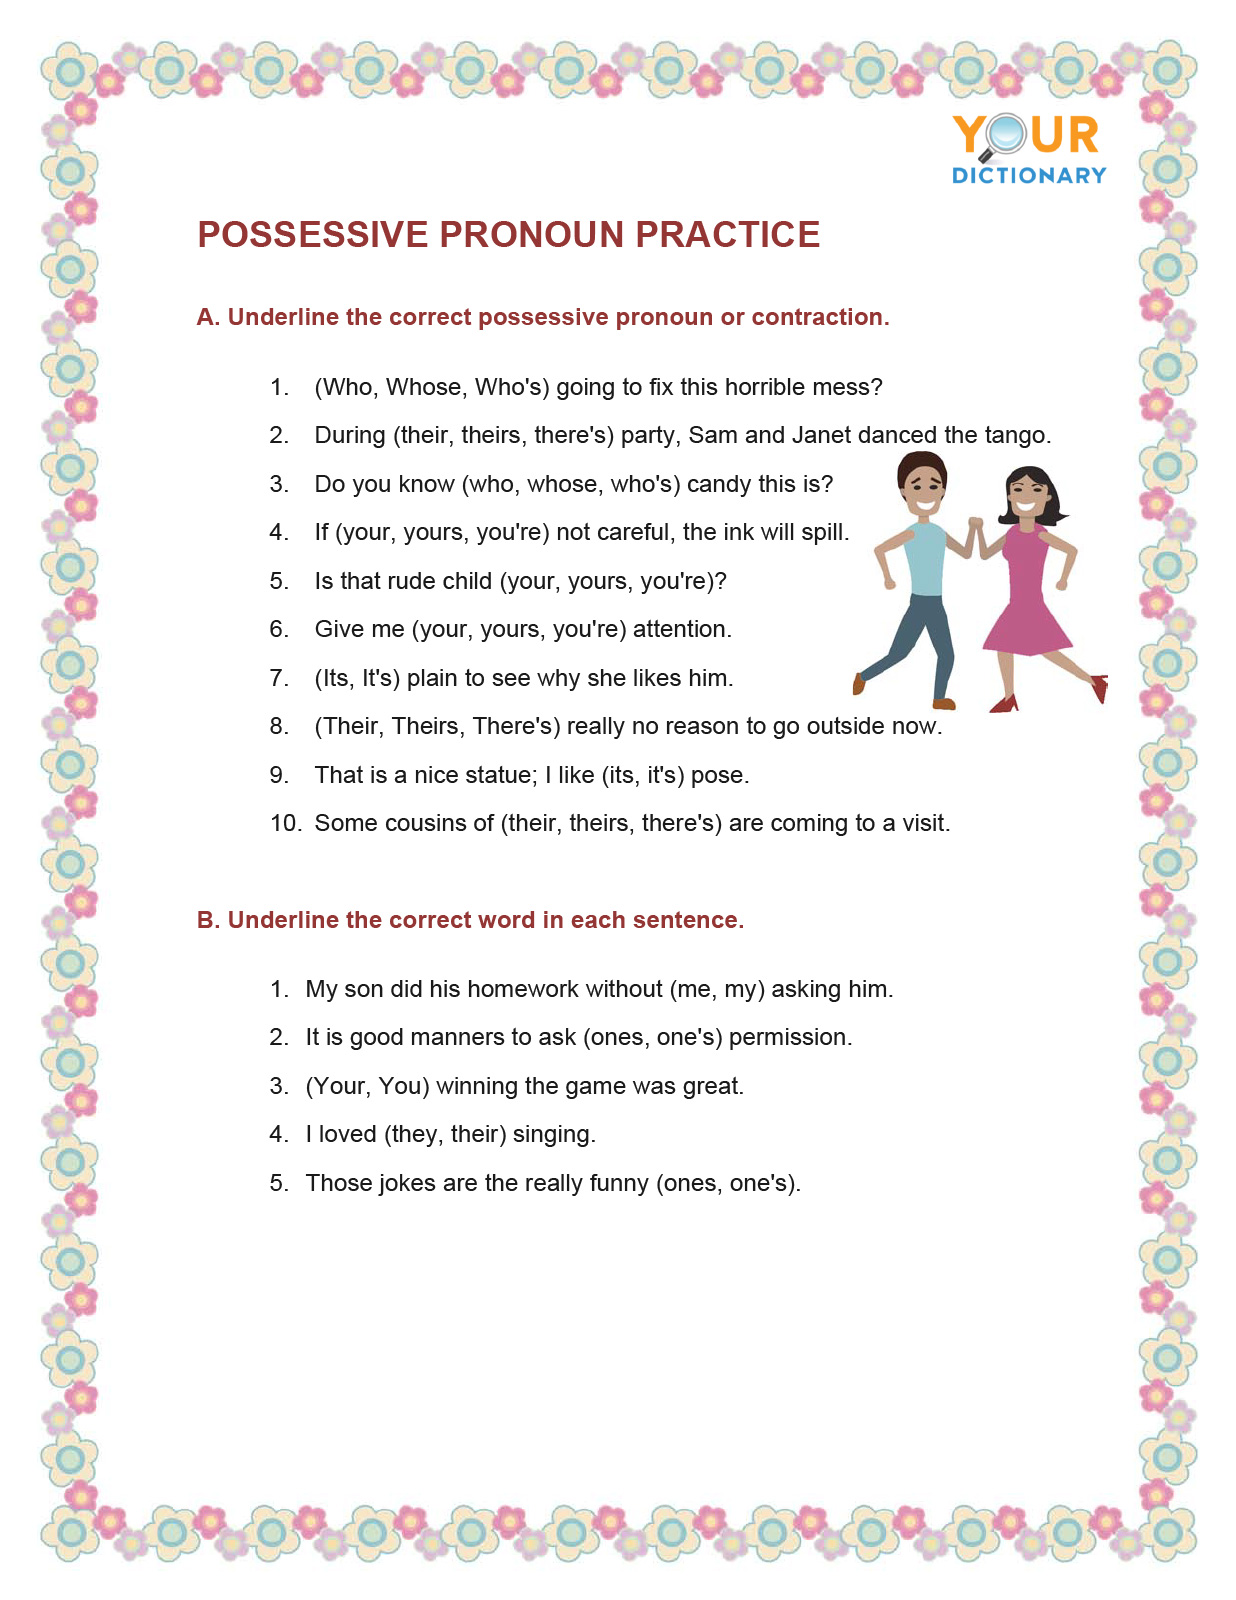 pronouns-worksheets-regular-pronouns-worksheets-pronouns-worksheets